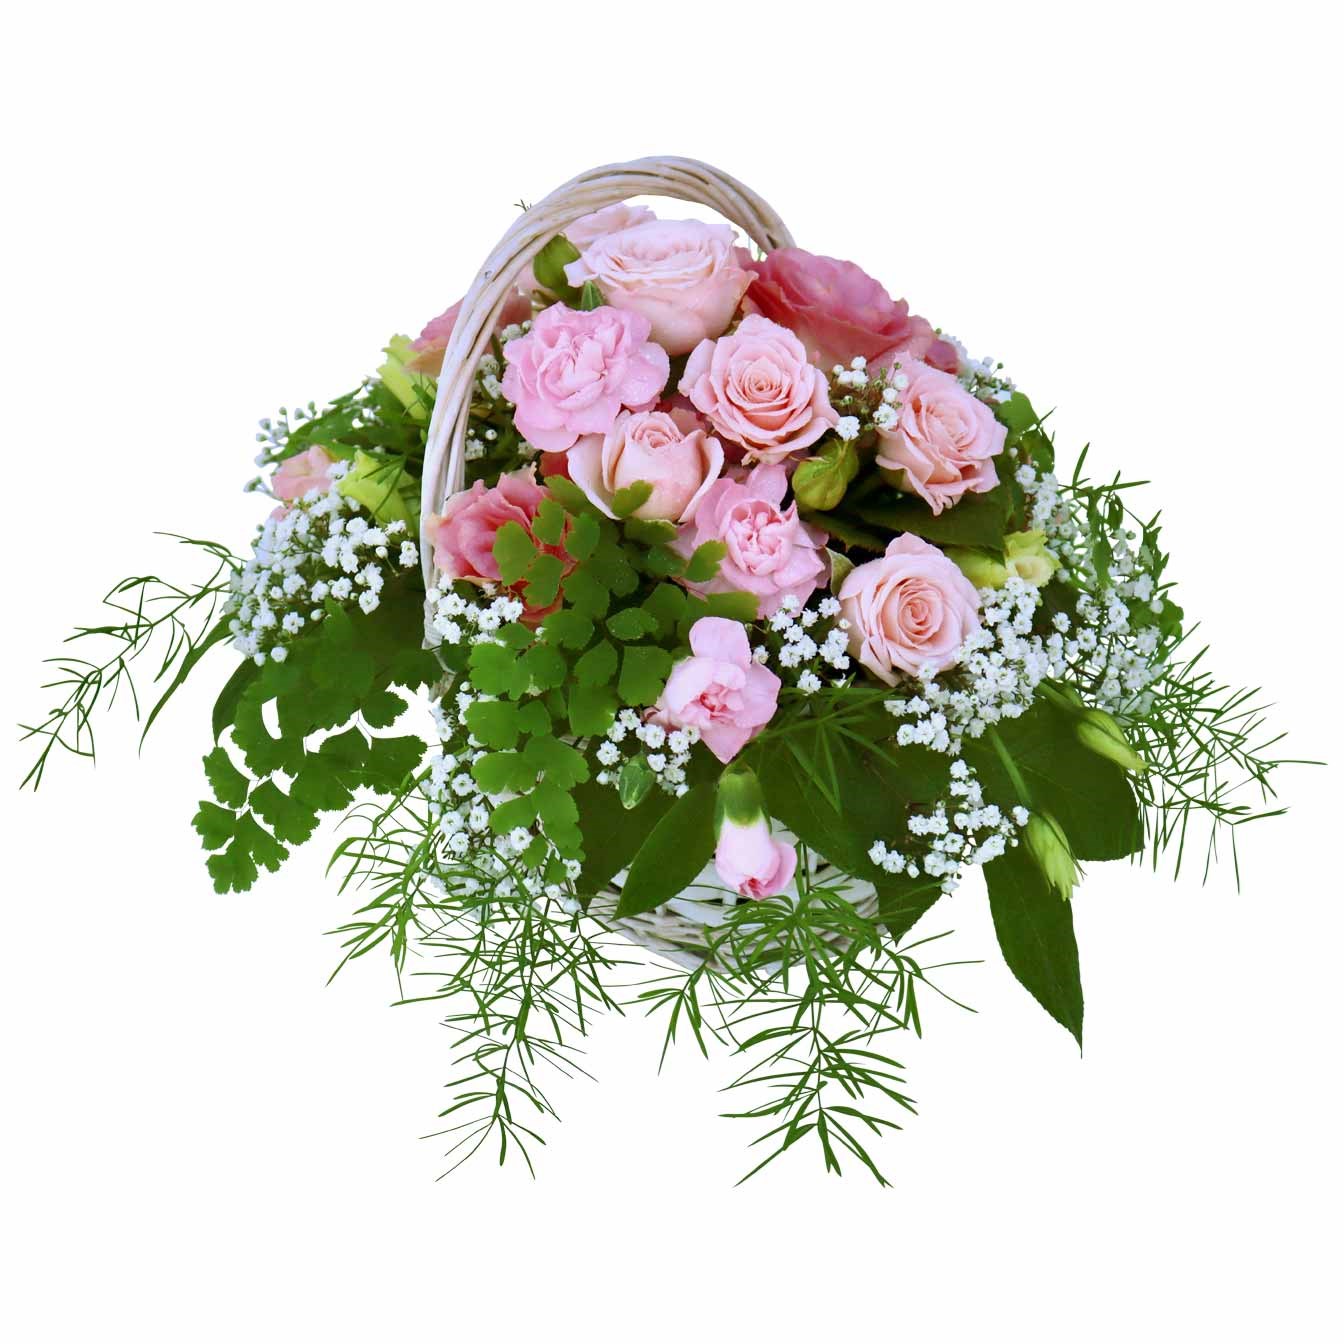 Basket of flowers, pink